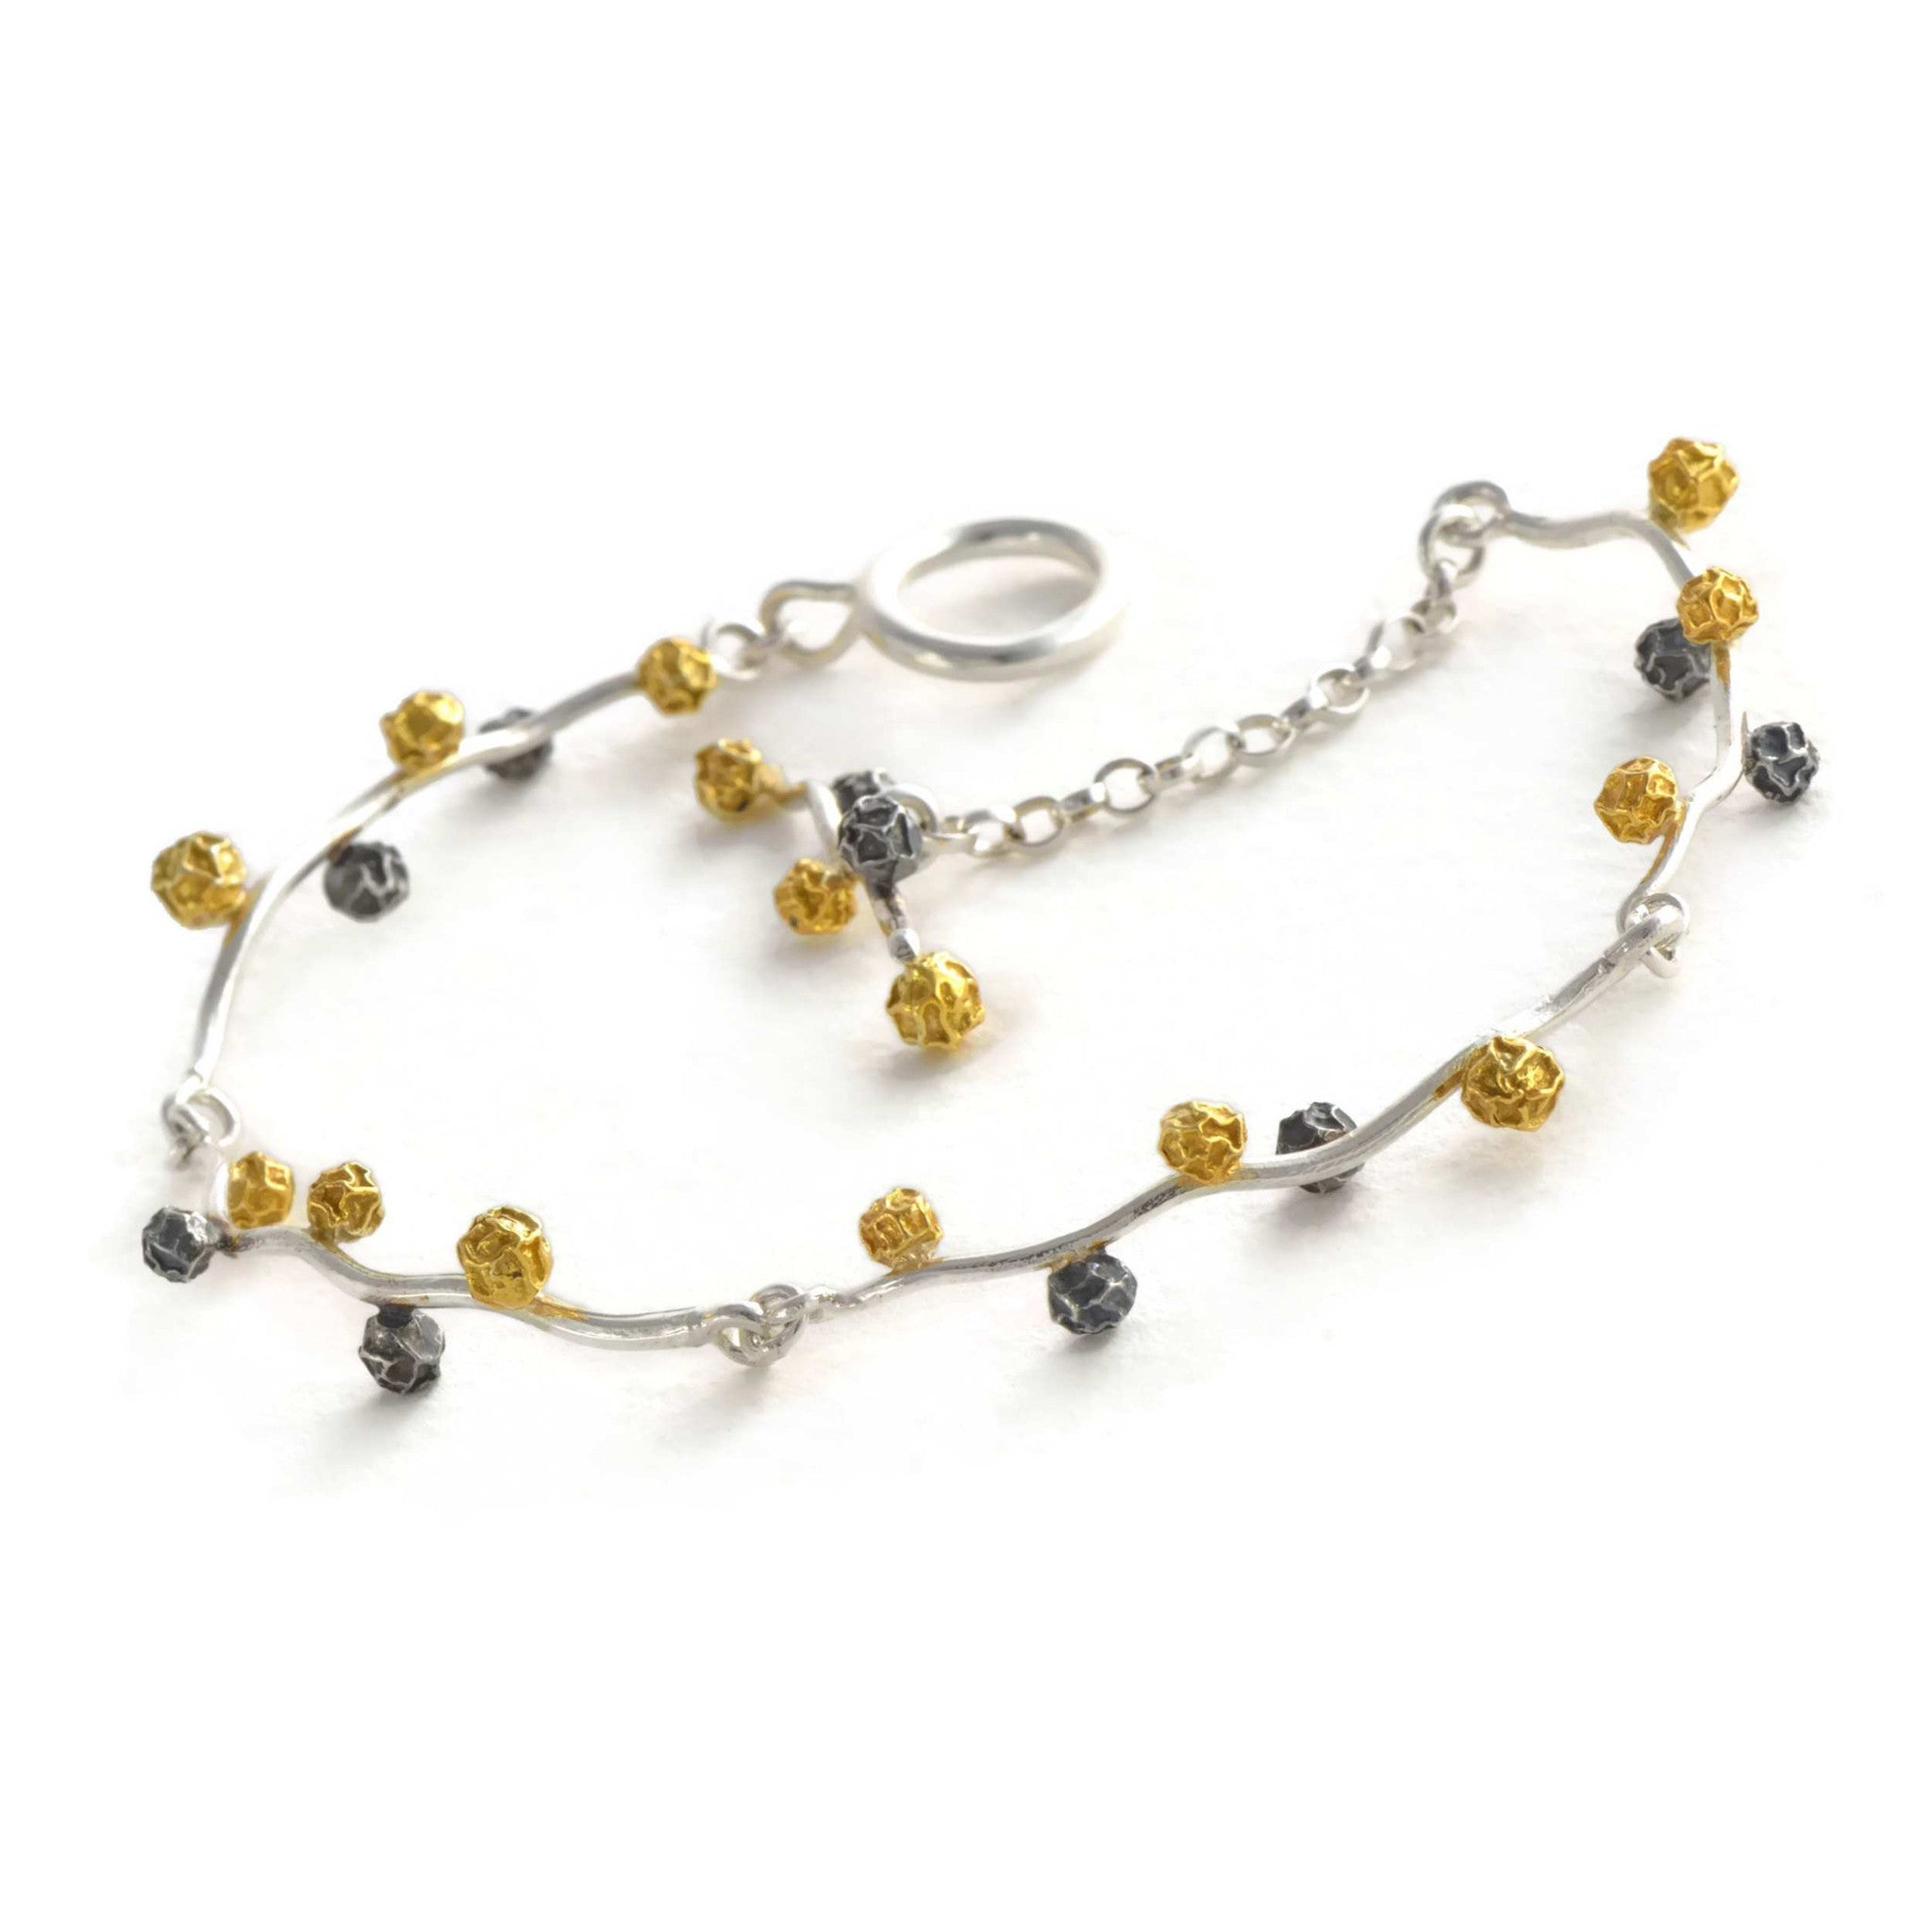 Post32 | Handmade jewelry bracelets, Jewelry accessories ideas, Bracelets  handmade beaded